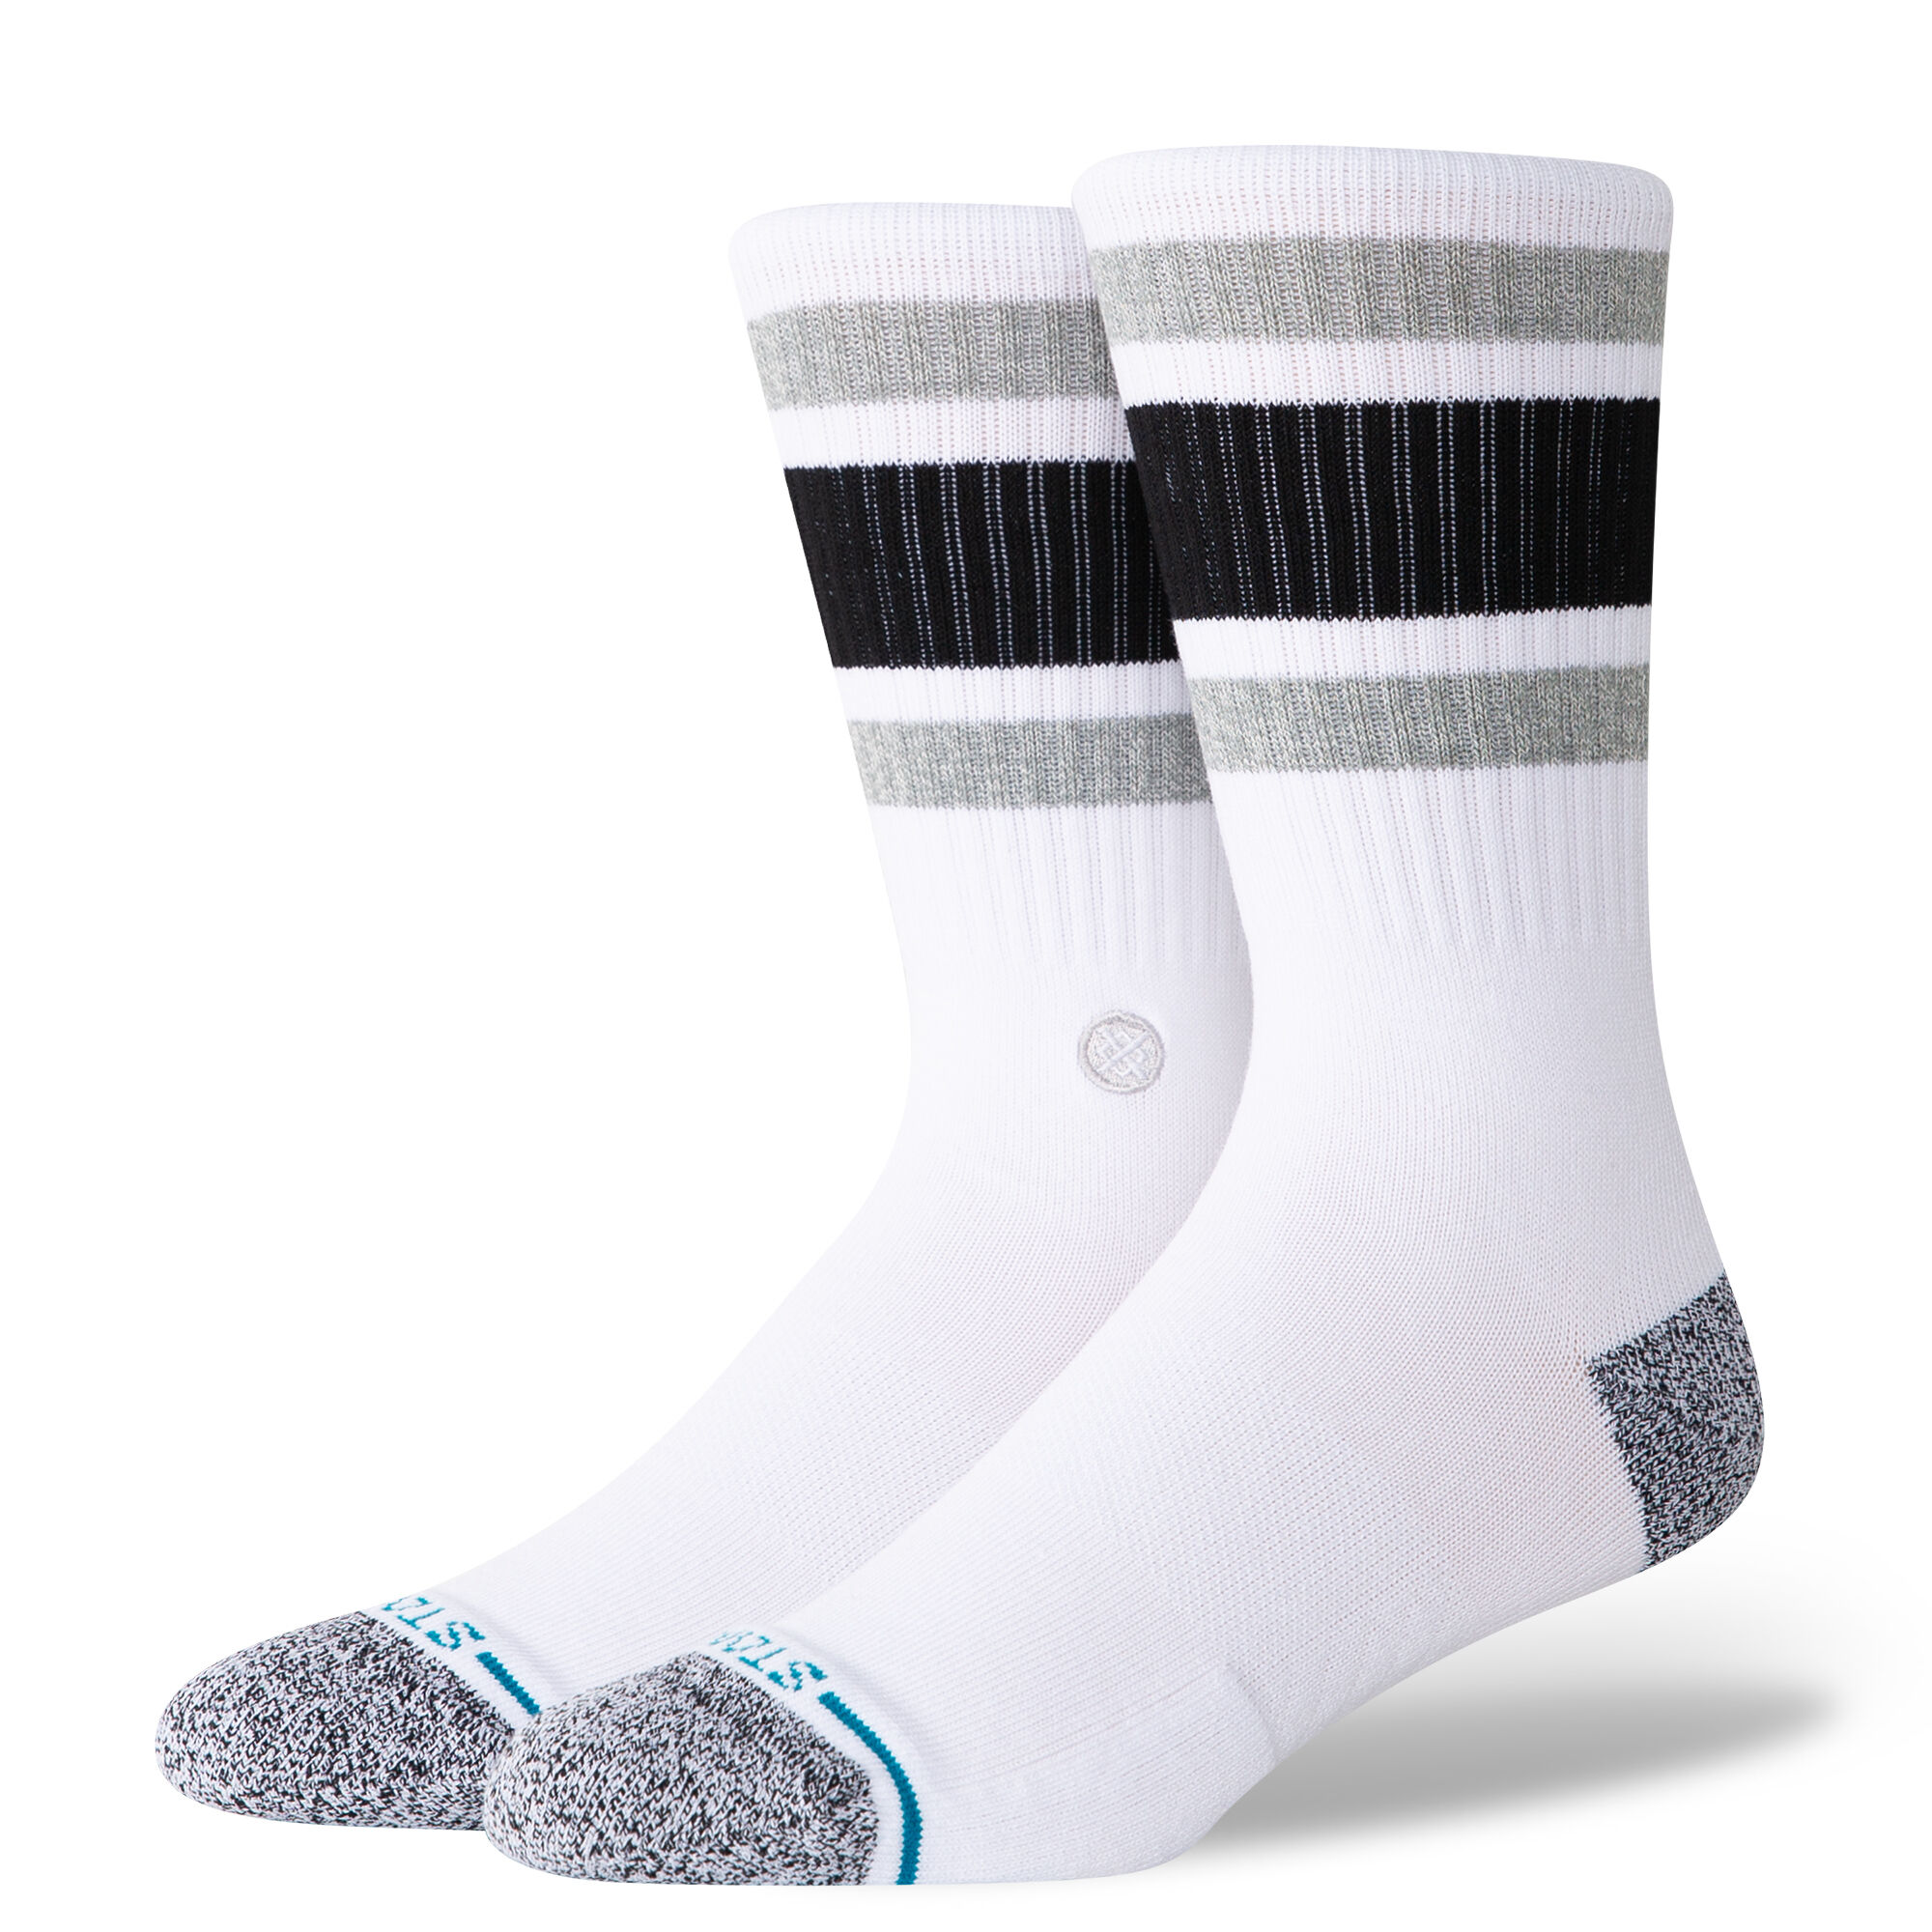 Socks : Shop Casual and Performance Socks | Stance